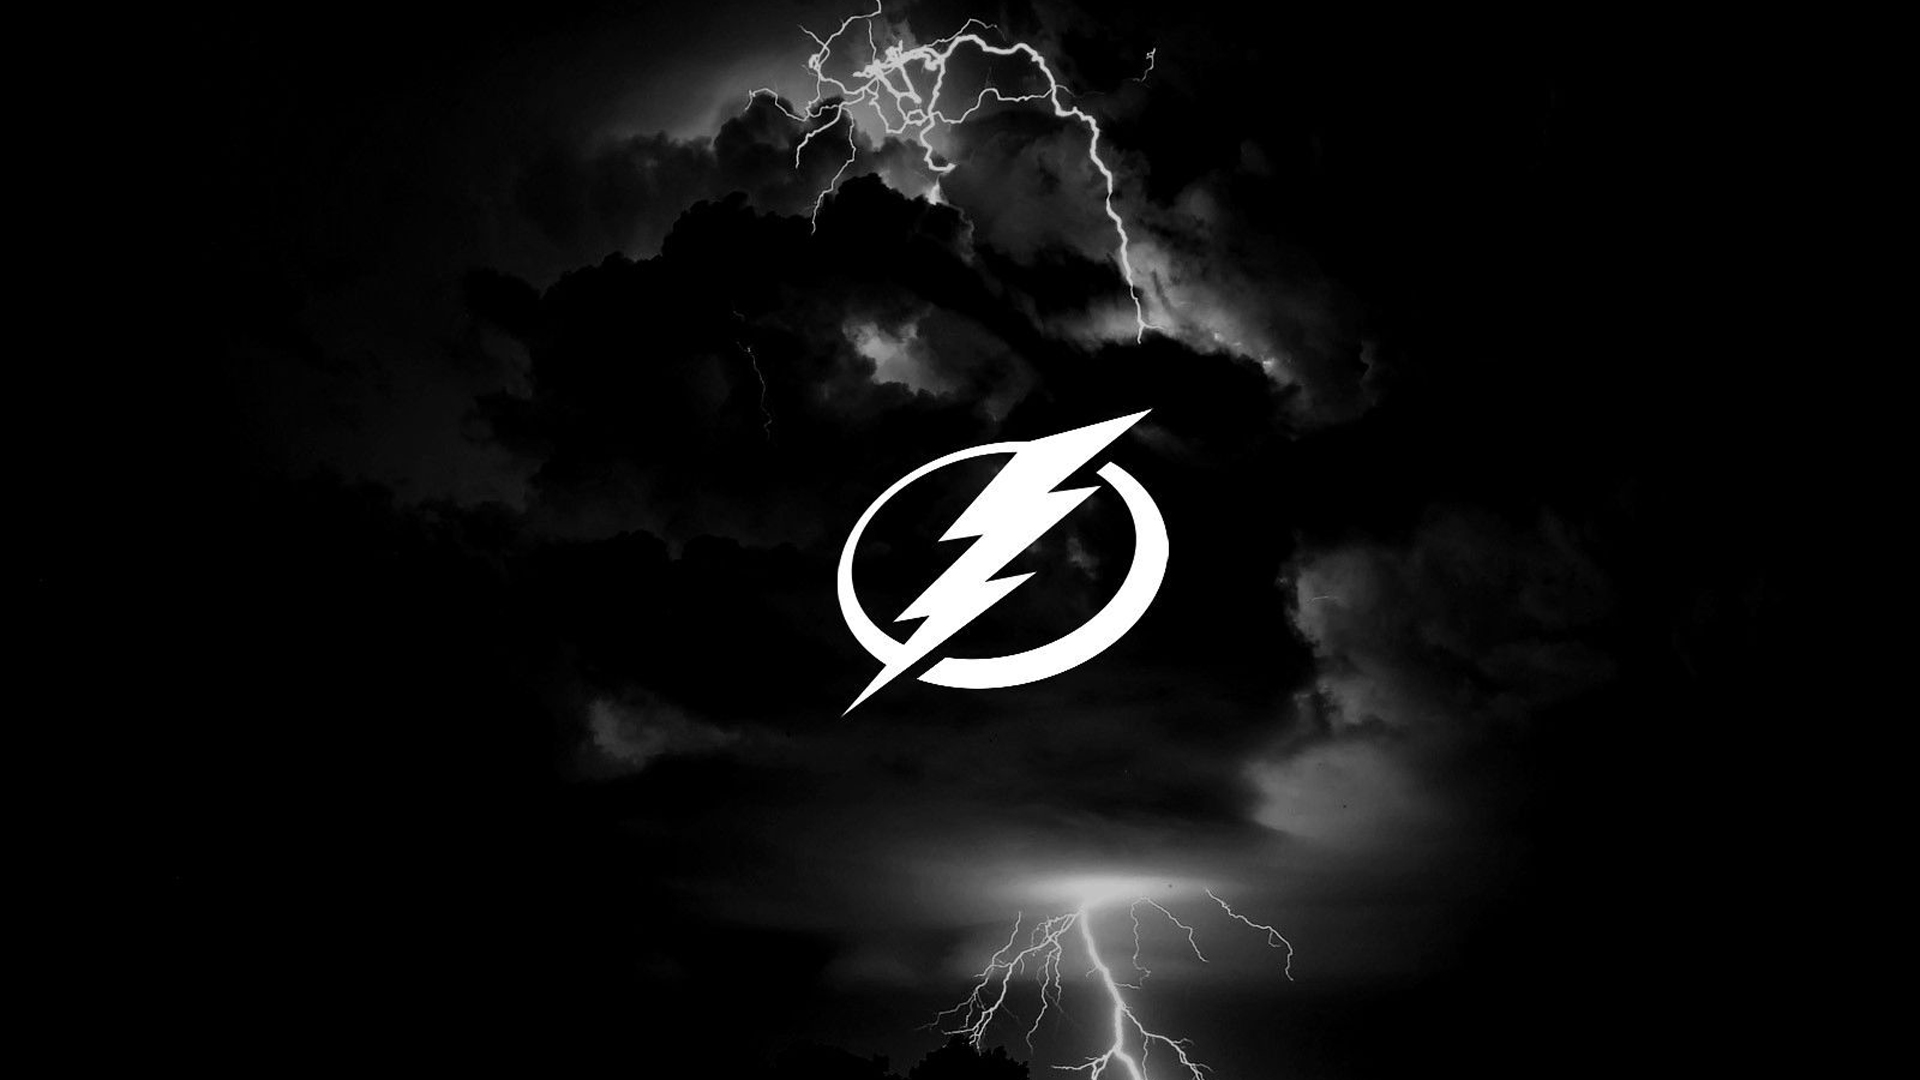 Tampa Bay Lightning Logo With Wallpaper Of Dark Clouds And Lightning HD Tampa Bay Lightning